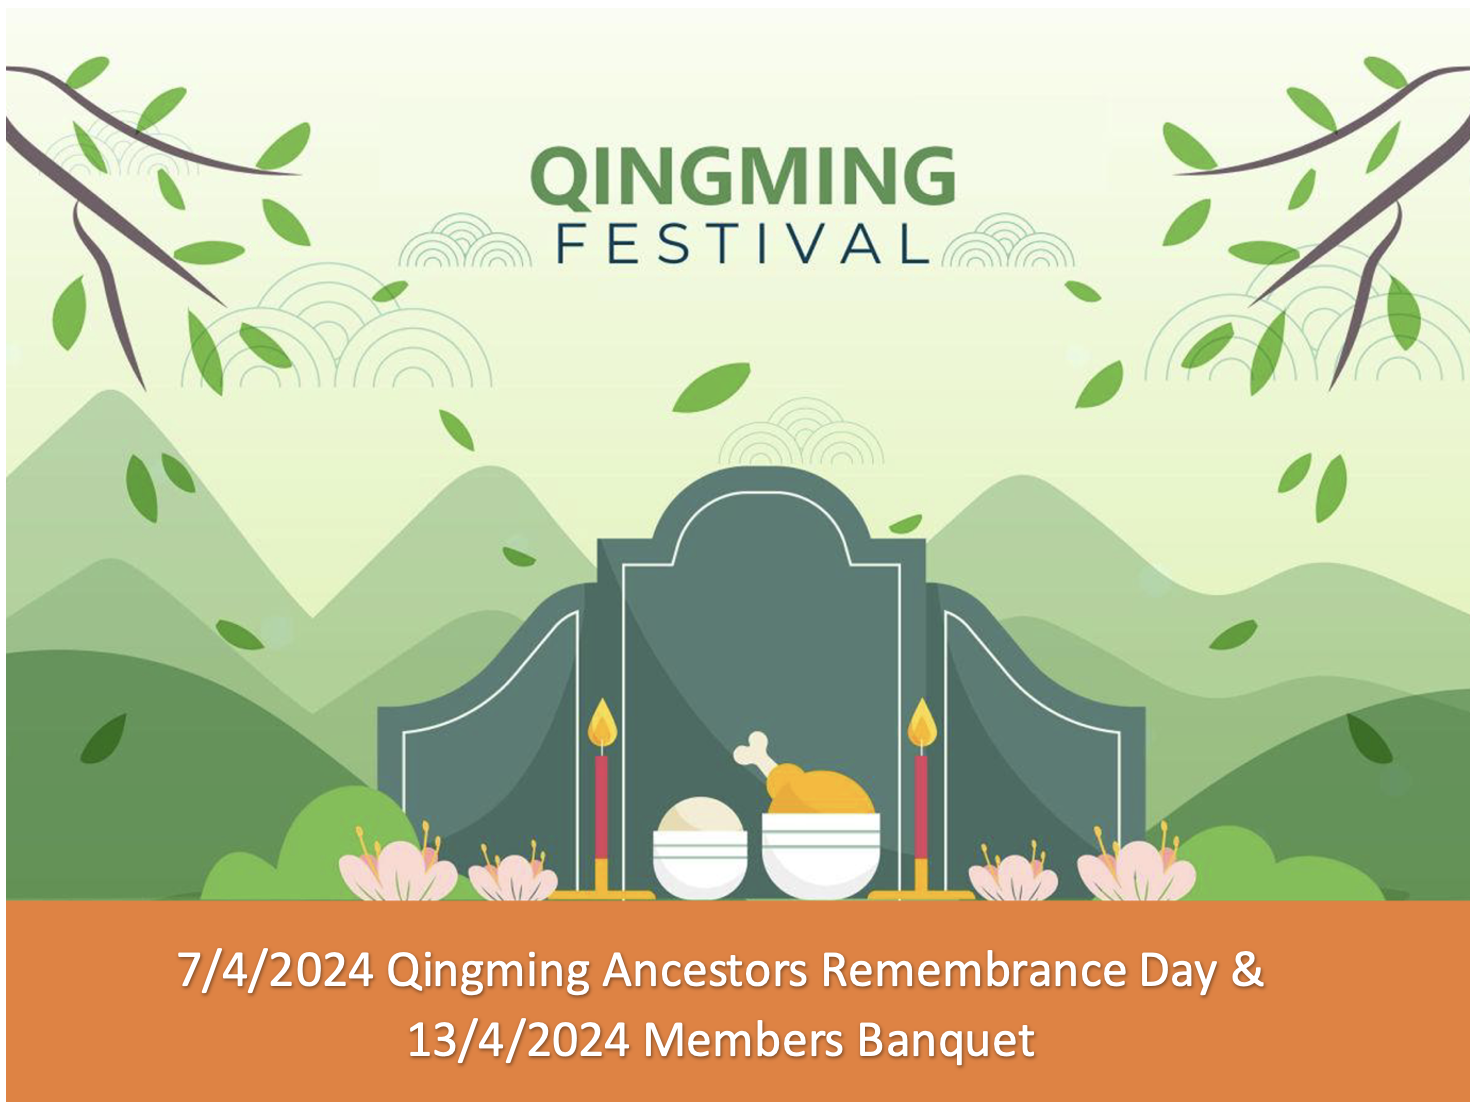 13/4/2024 – Qingming festival members banquet